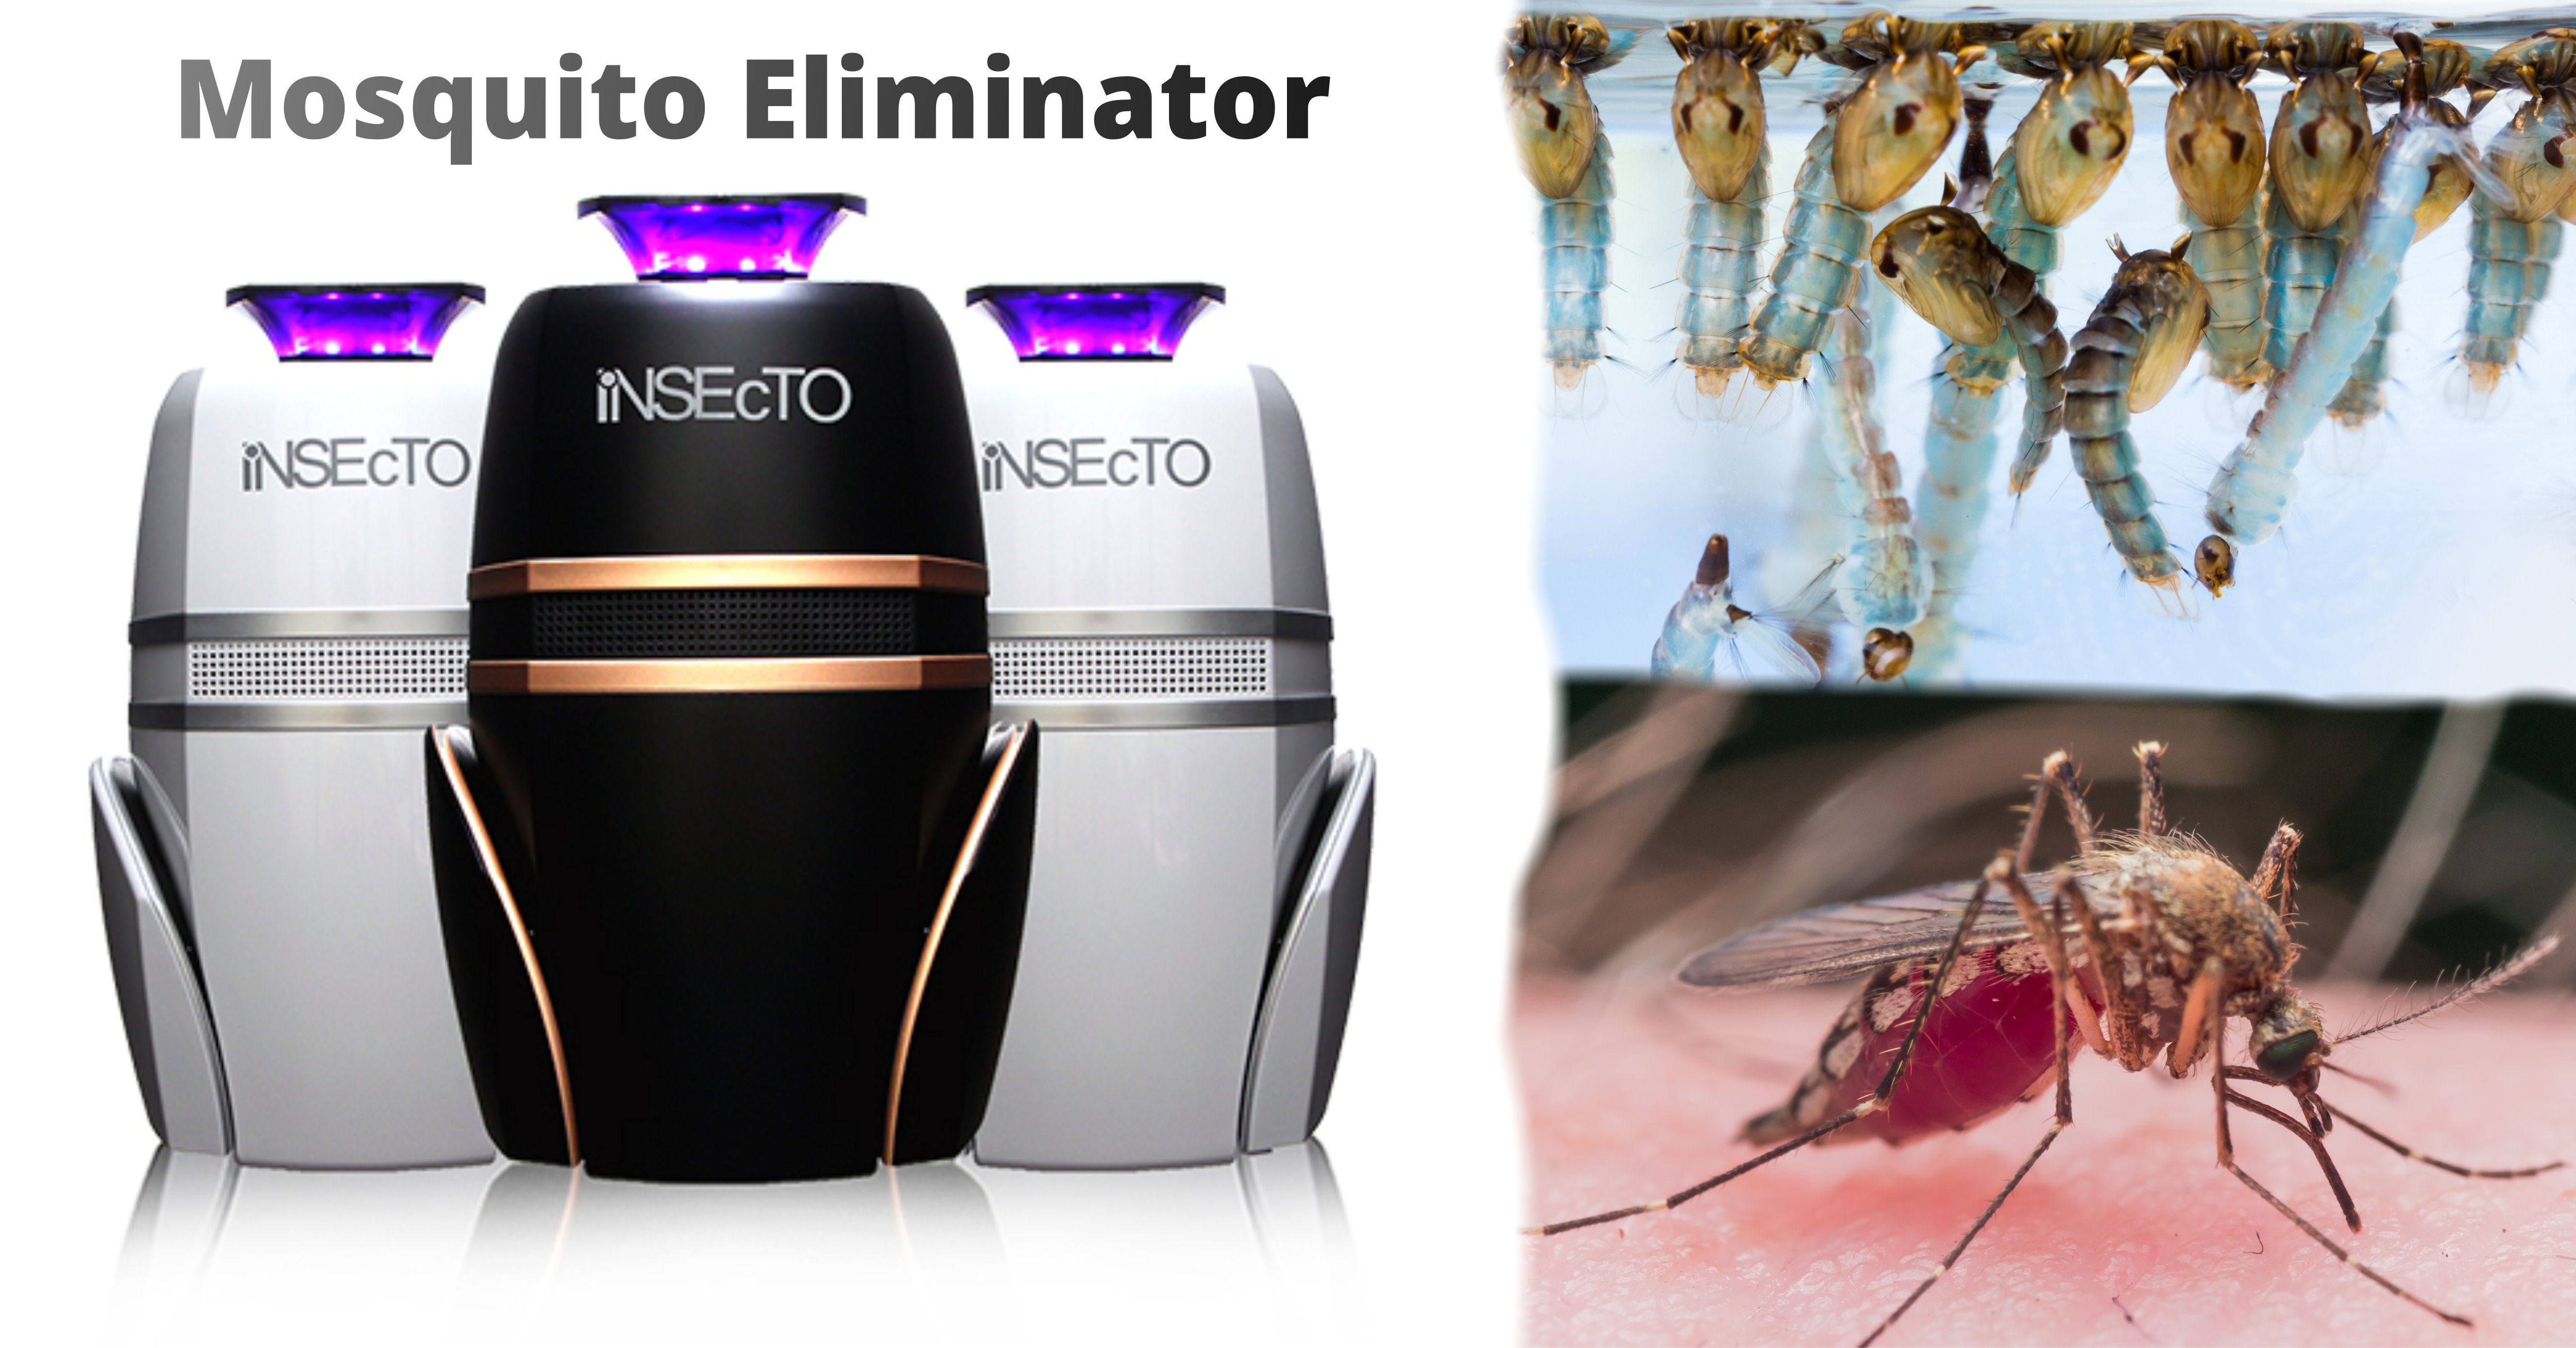 INSECTO Mosquito Eliminator